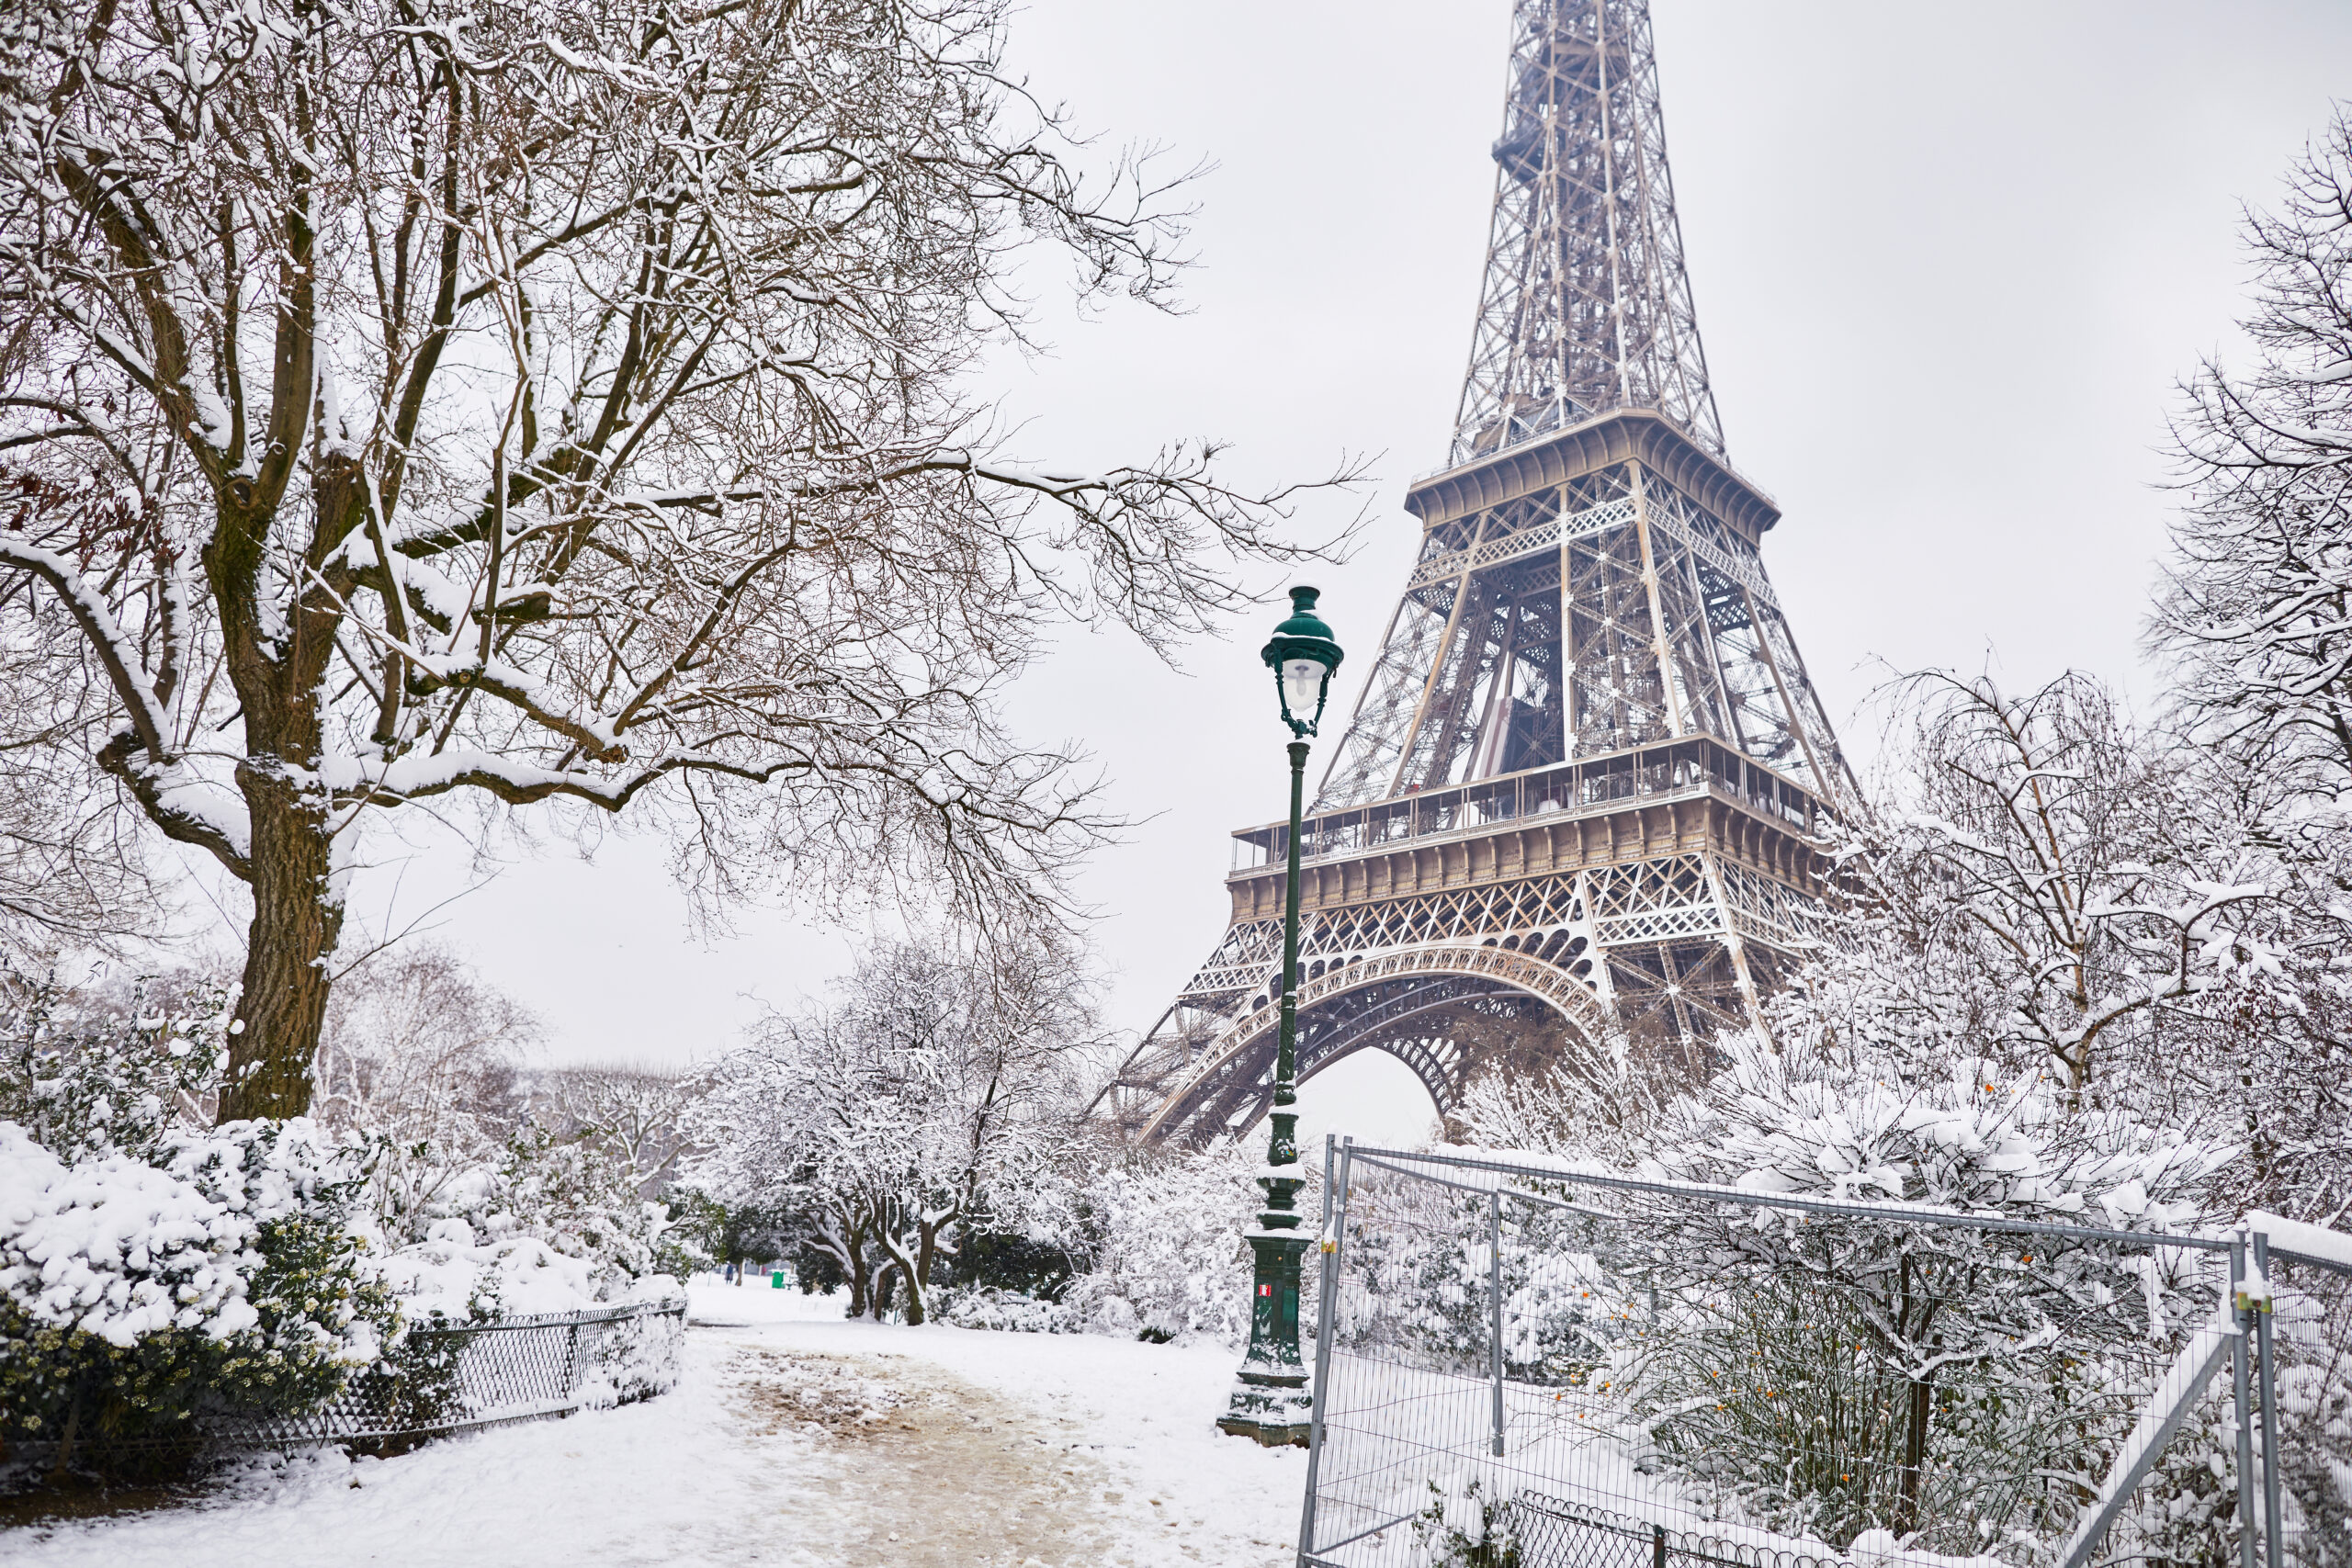 Paris in Winter Image by Ekaterina Pokrovsky via Shutterstock||||